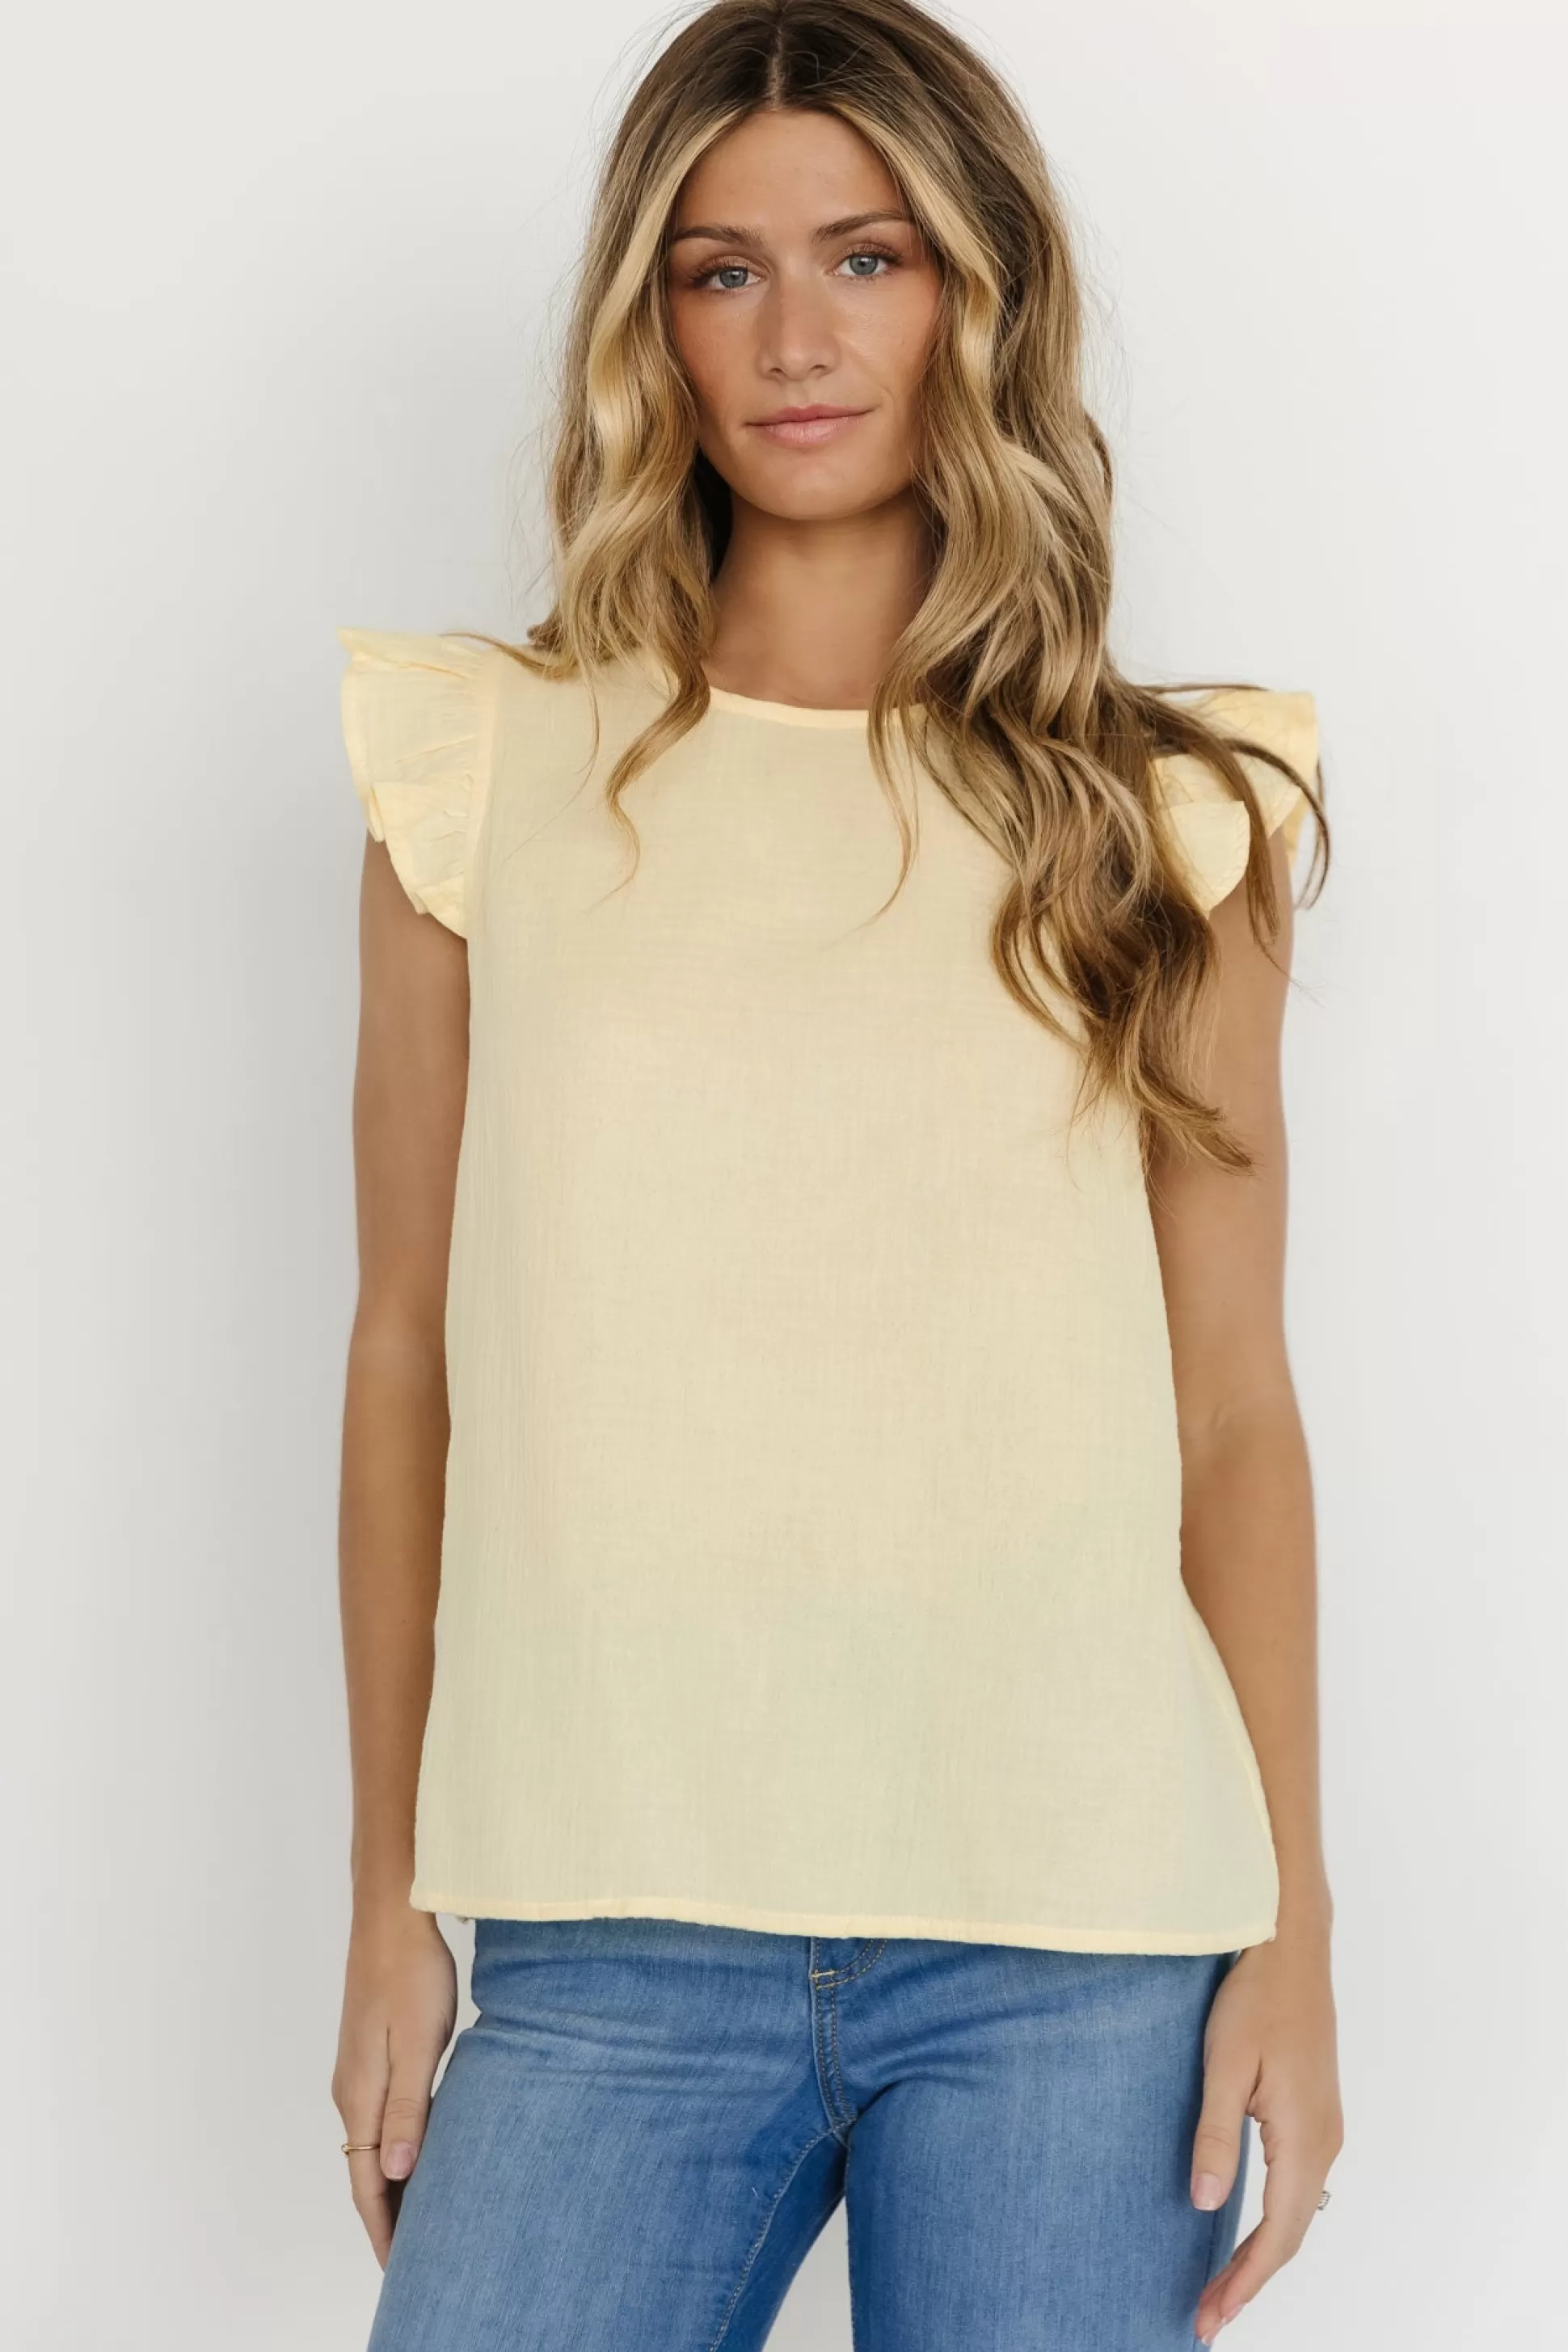 blouses + shirts | Baltic Born Arlowe Ruffle Top | Yellow